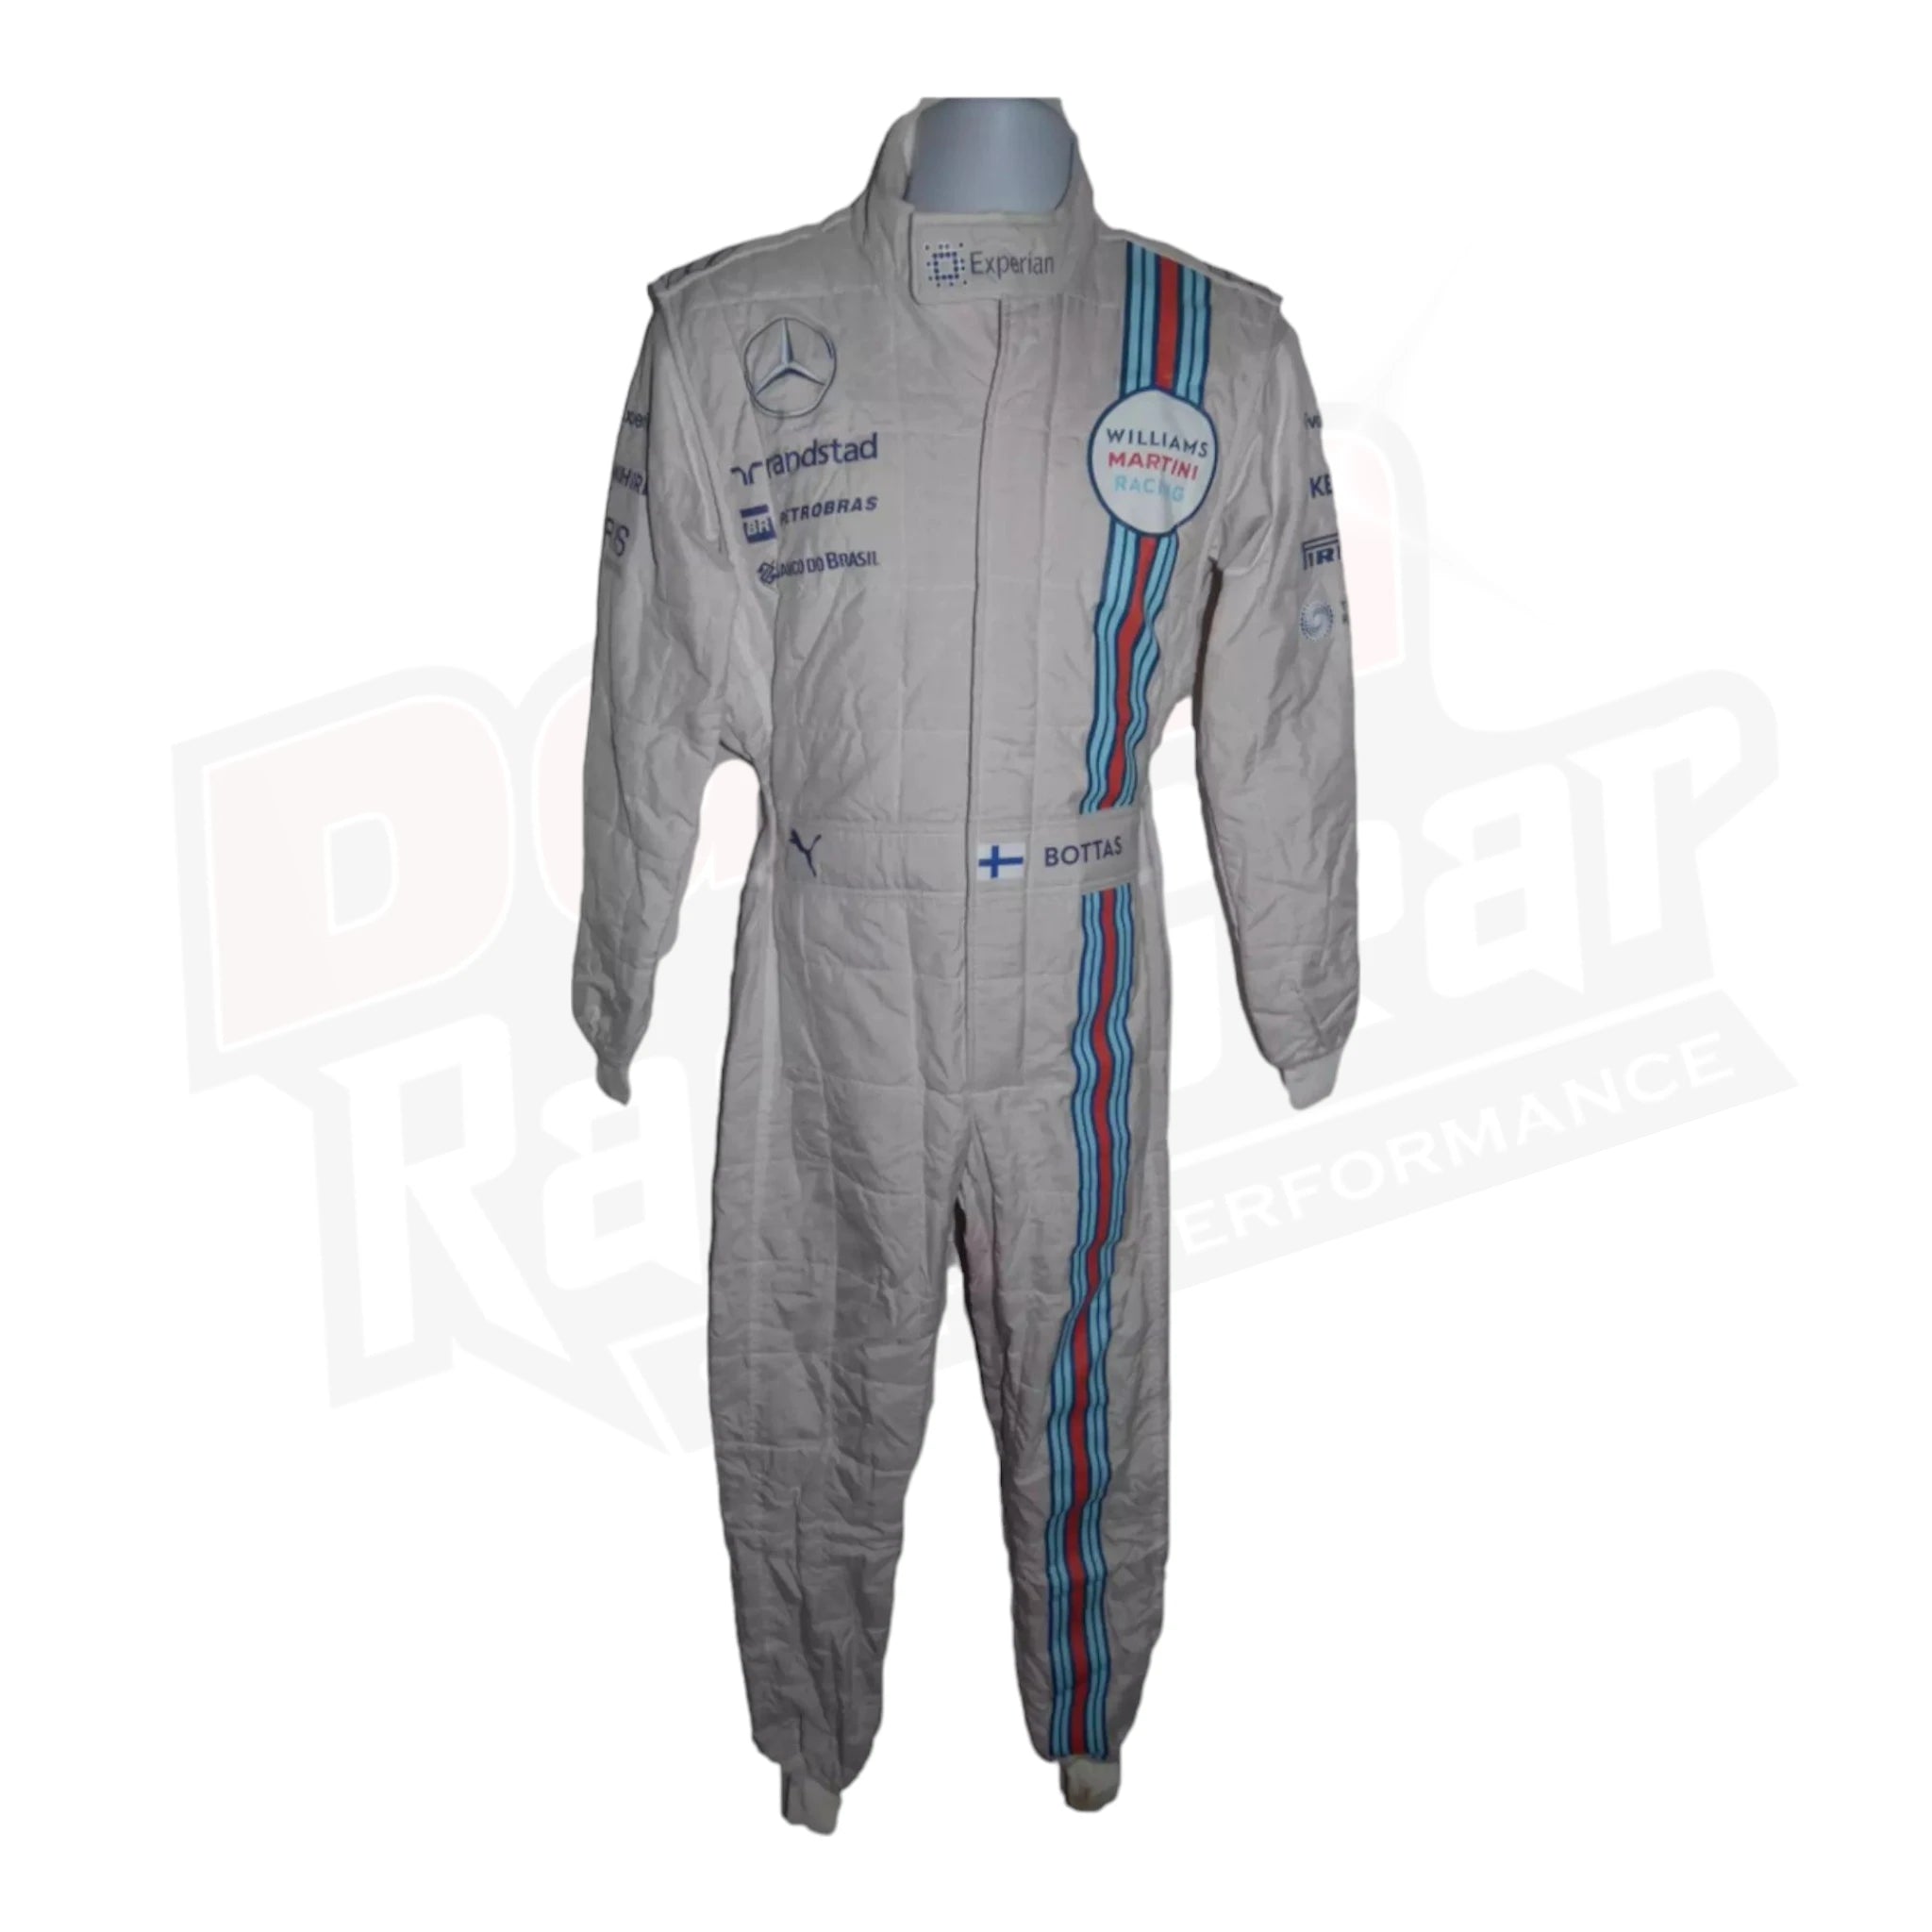 Valtteri Bottas 2014 Williams Martini race suit – Russian GP spec